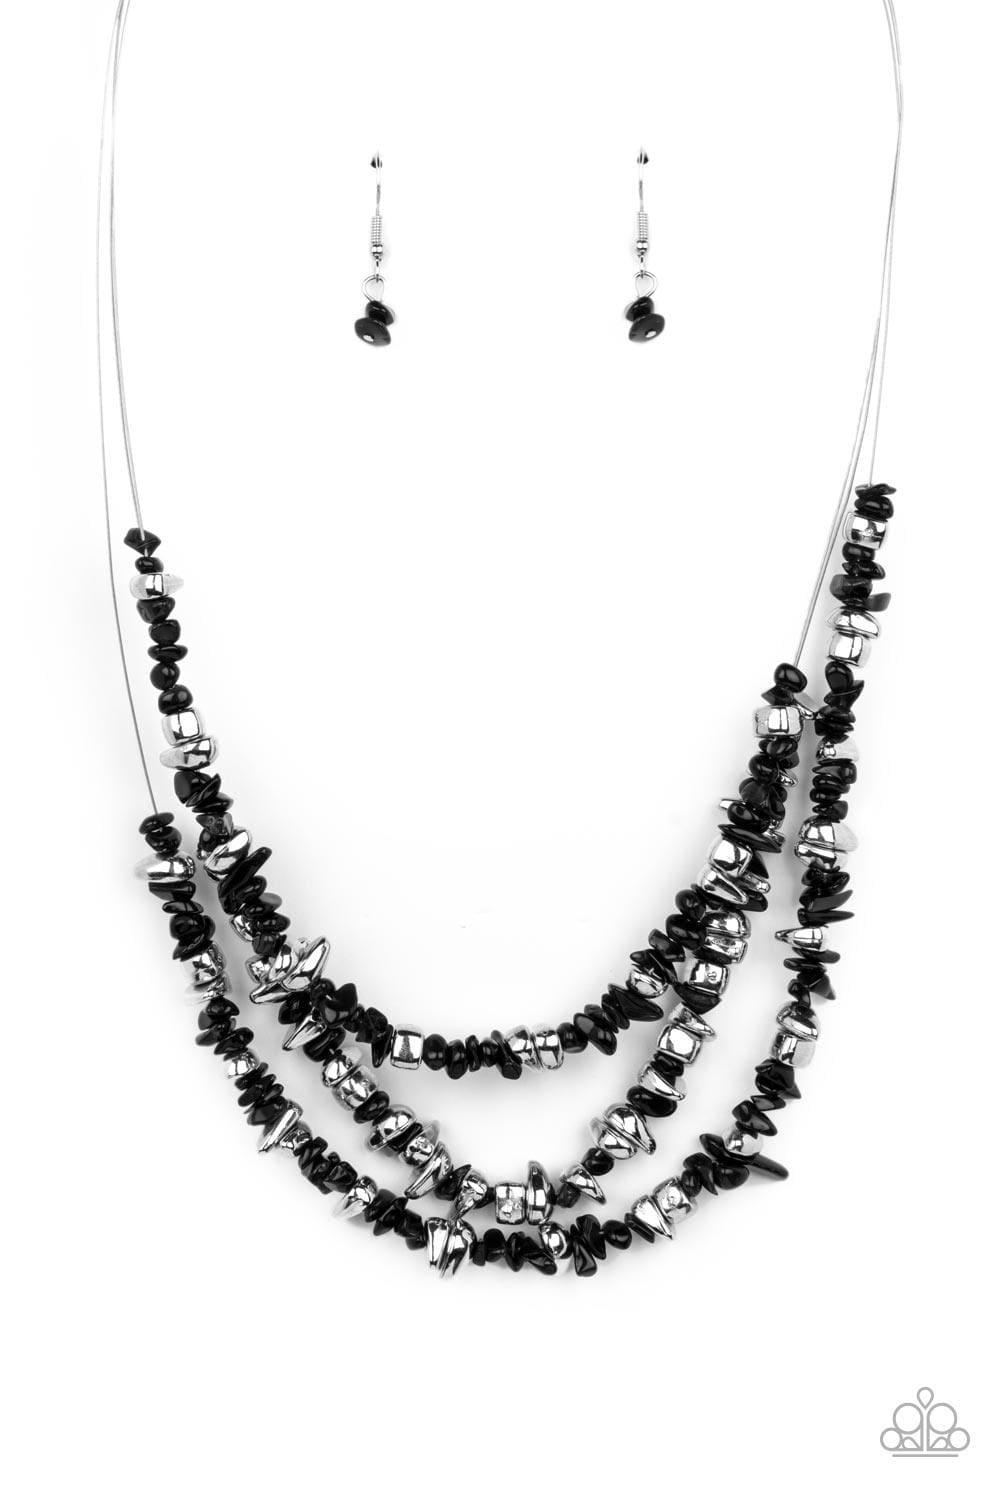 Paparazzi Accessories - Placid Pebbles - Black Necklace - Bling by JessieK